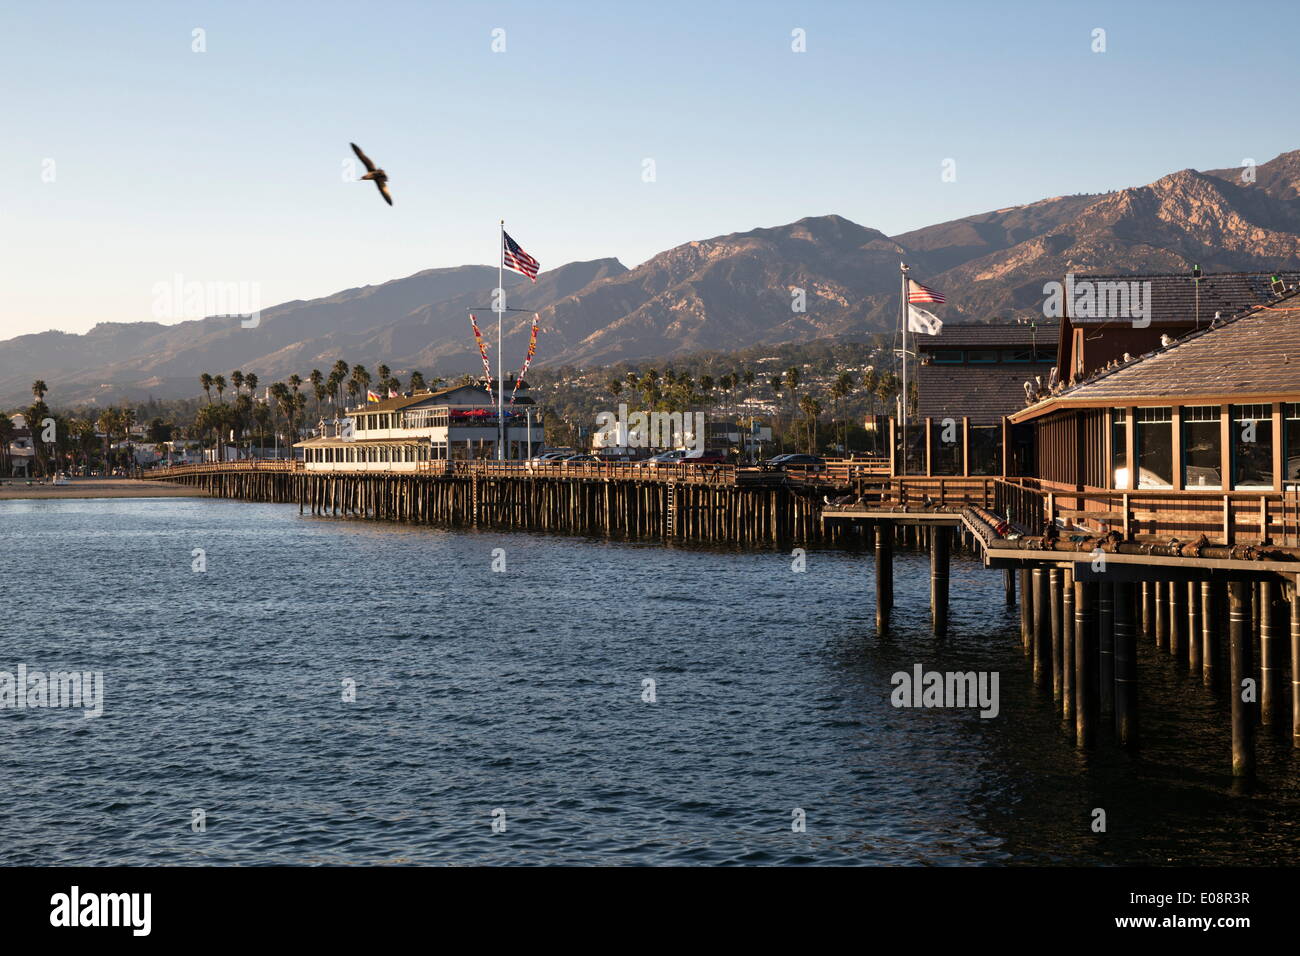 Stearns Wharf, Santa Barbara, Santa Barbara County, Californie, États-Unis d'Amérique, Amérique du Nord Banque D'Images